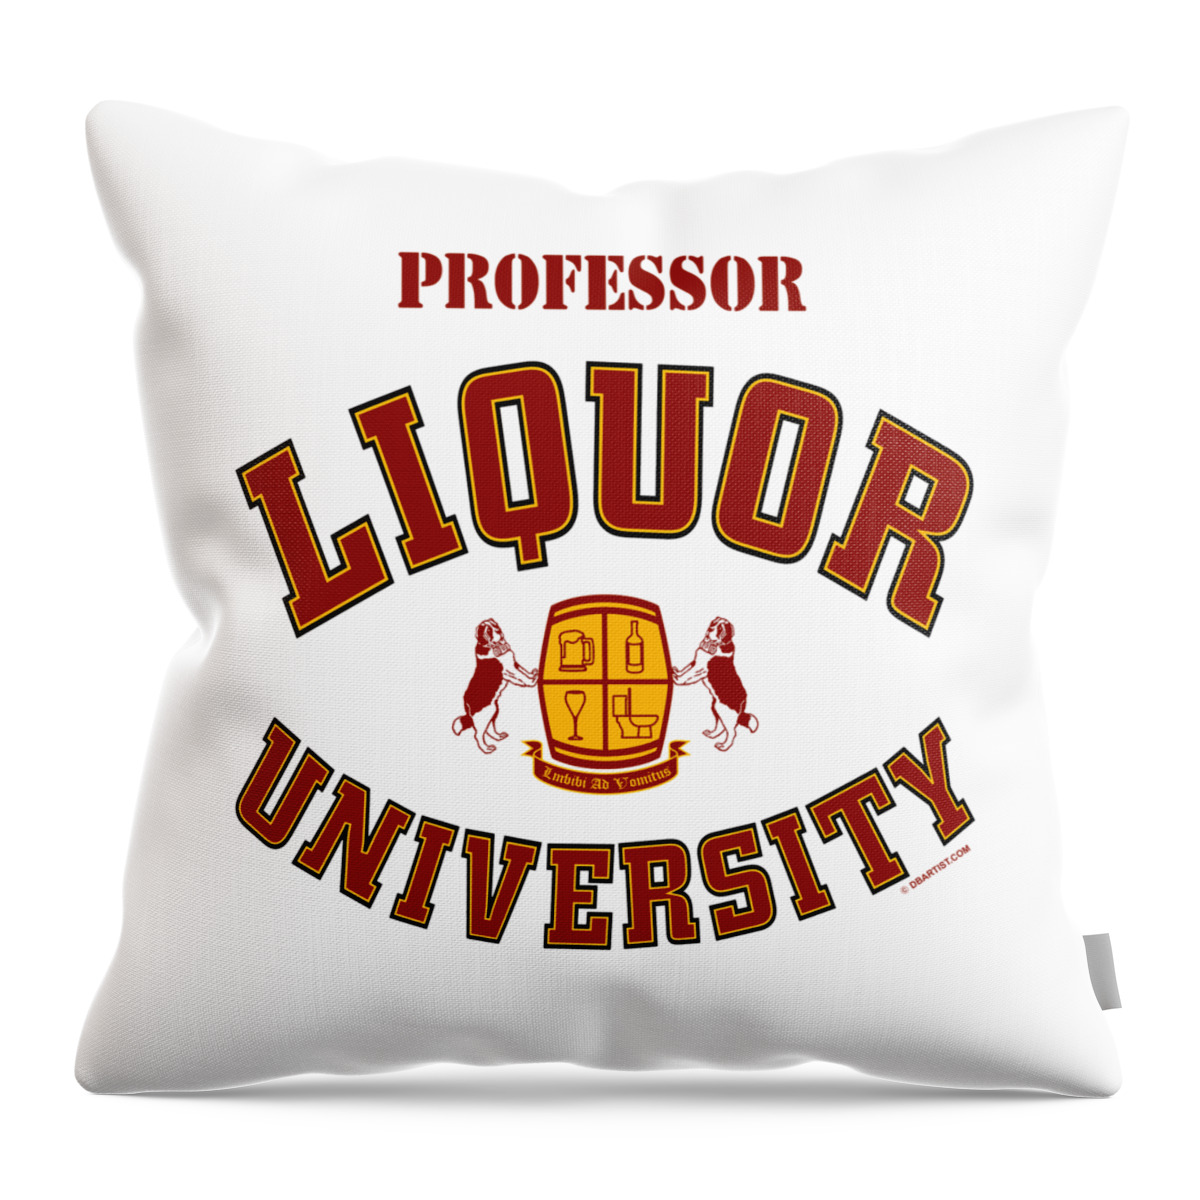 Liquor U Throw Pillow featuring the digital art Liquor University Professor by DB Artist